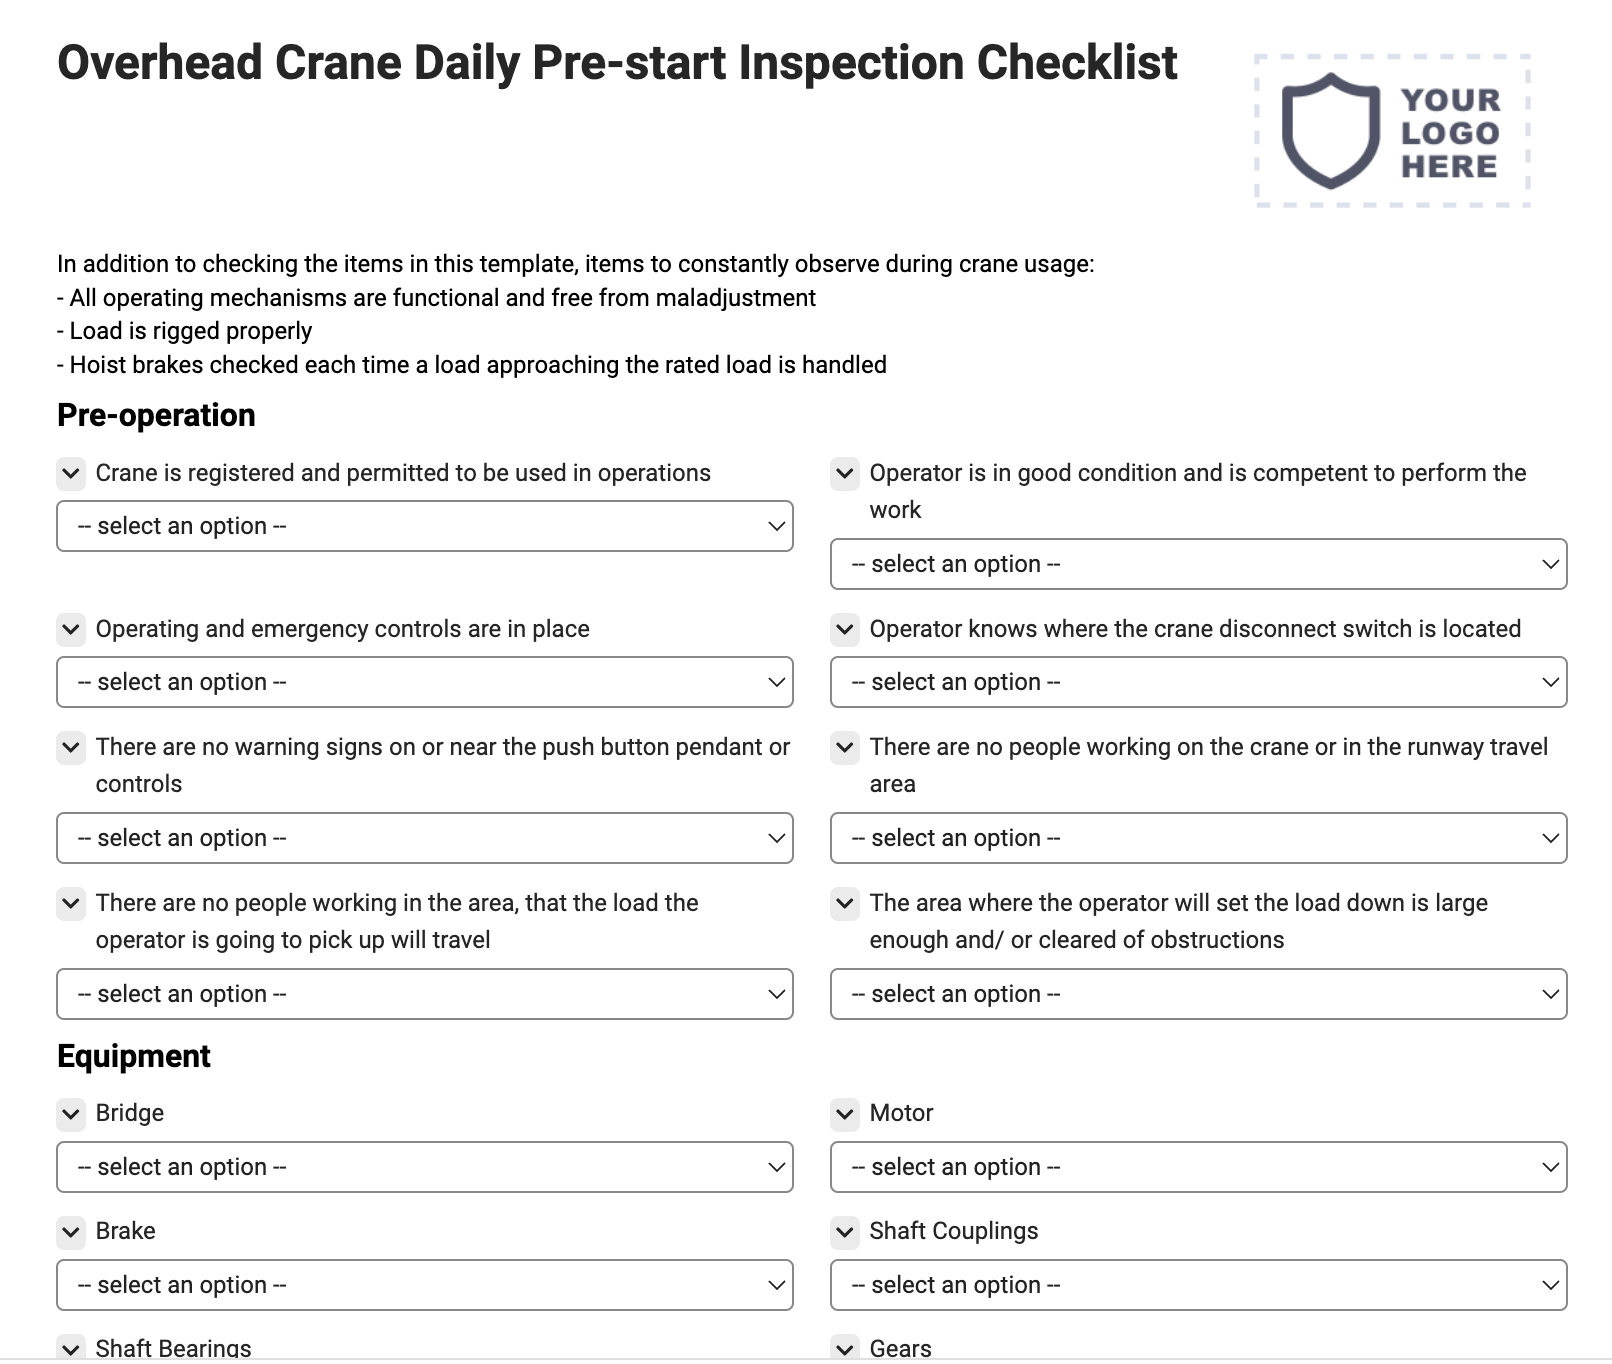 Overhead Crane Daily Pre-start Inspection Checklist